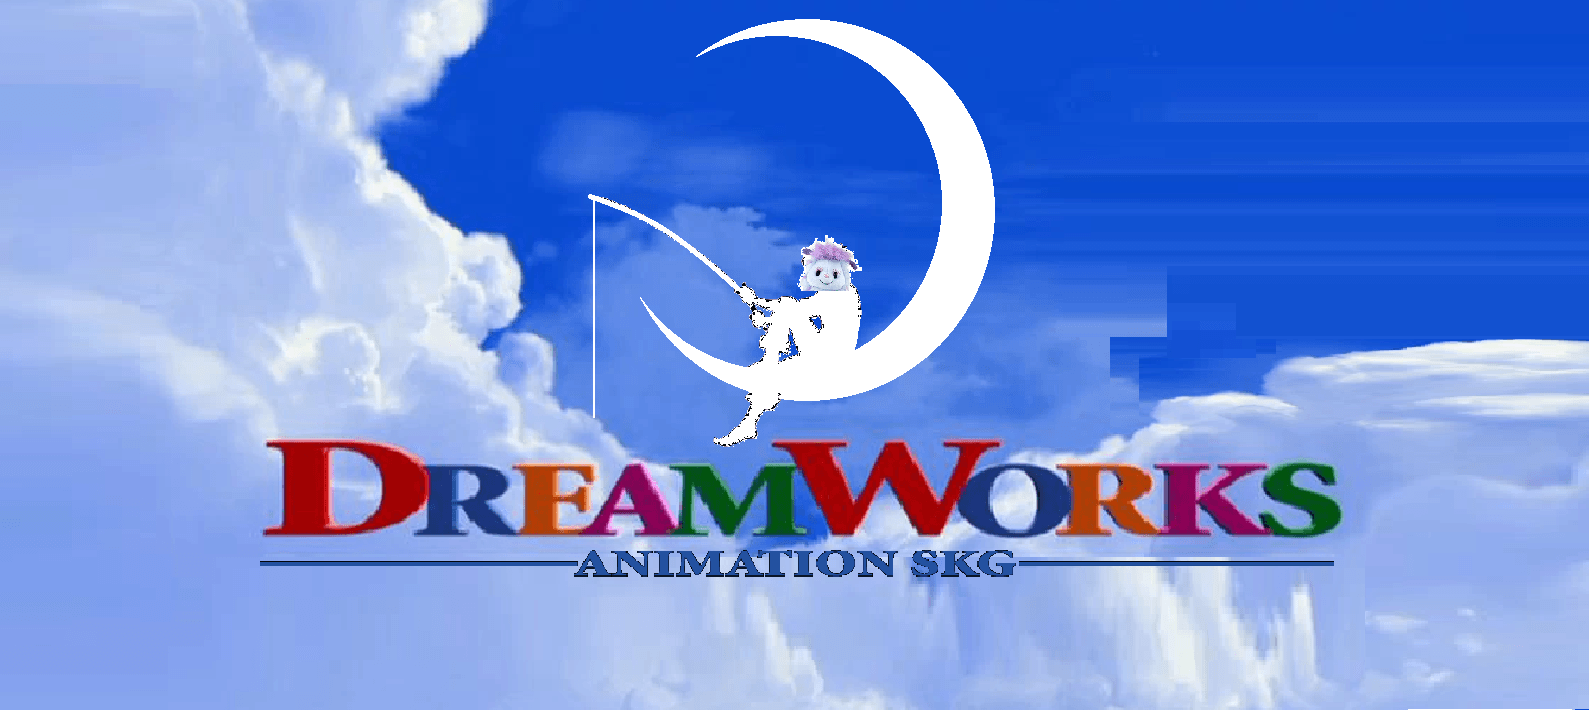 DreamWorks 2018 Logo - DreamWorks Animation logo (Barbie Version).png. The Idea